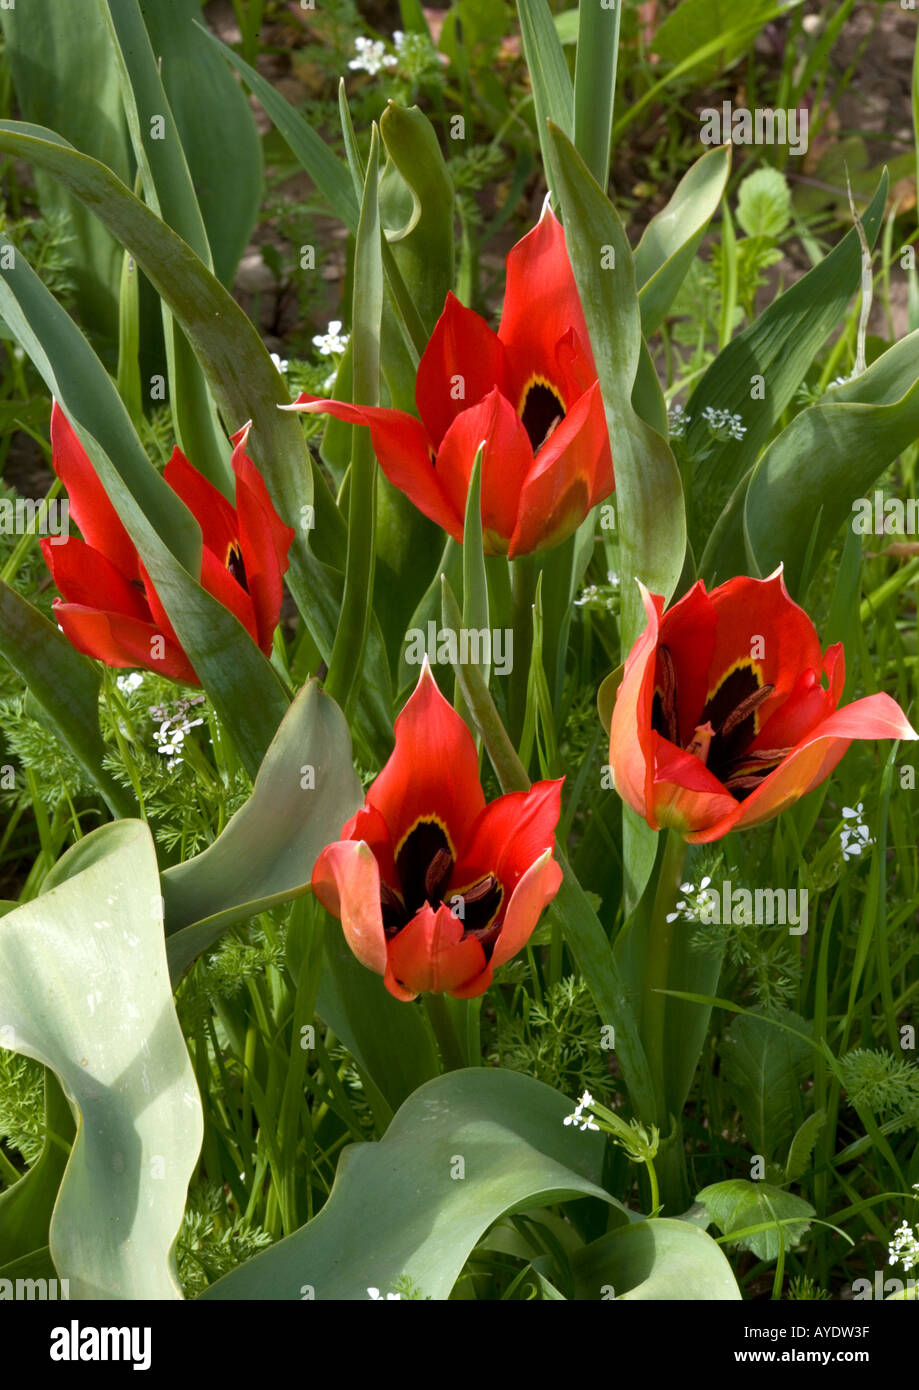 Tulip field (Tulipa agenensis) close-up, Chios, Greece Stock Photo